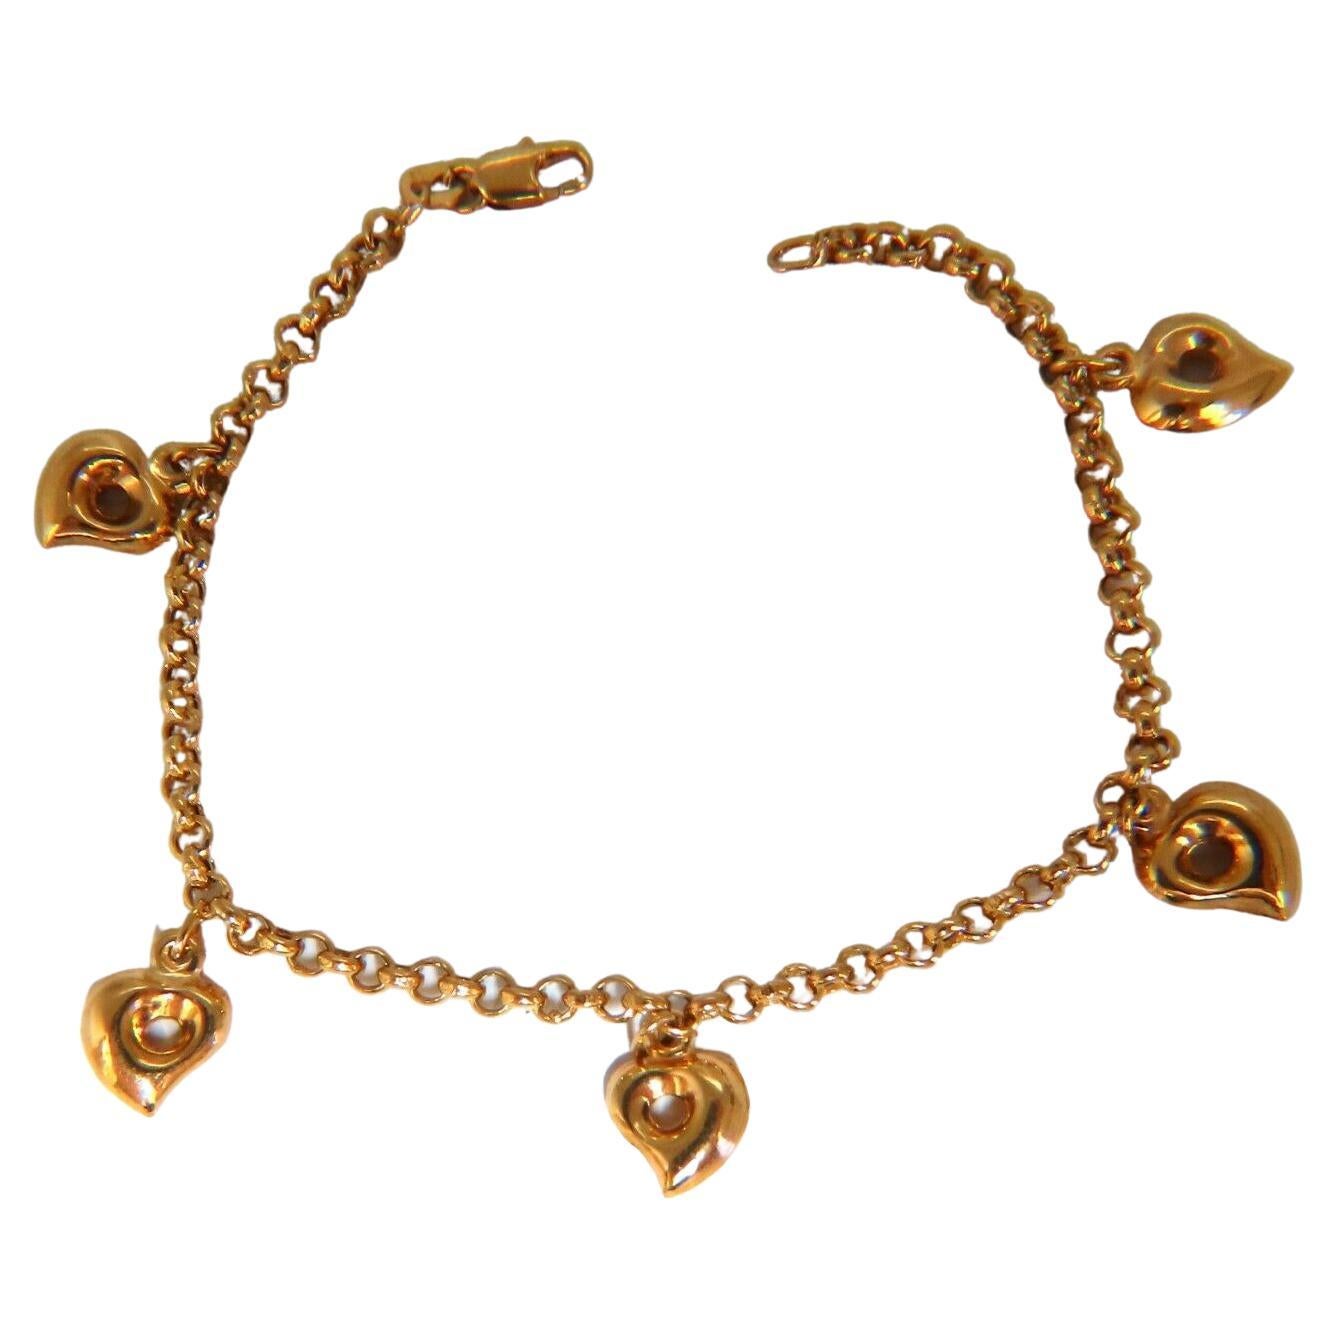 Five Heart Charm Link Bracelet 14 Karat Gold